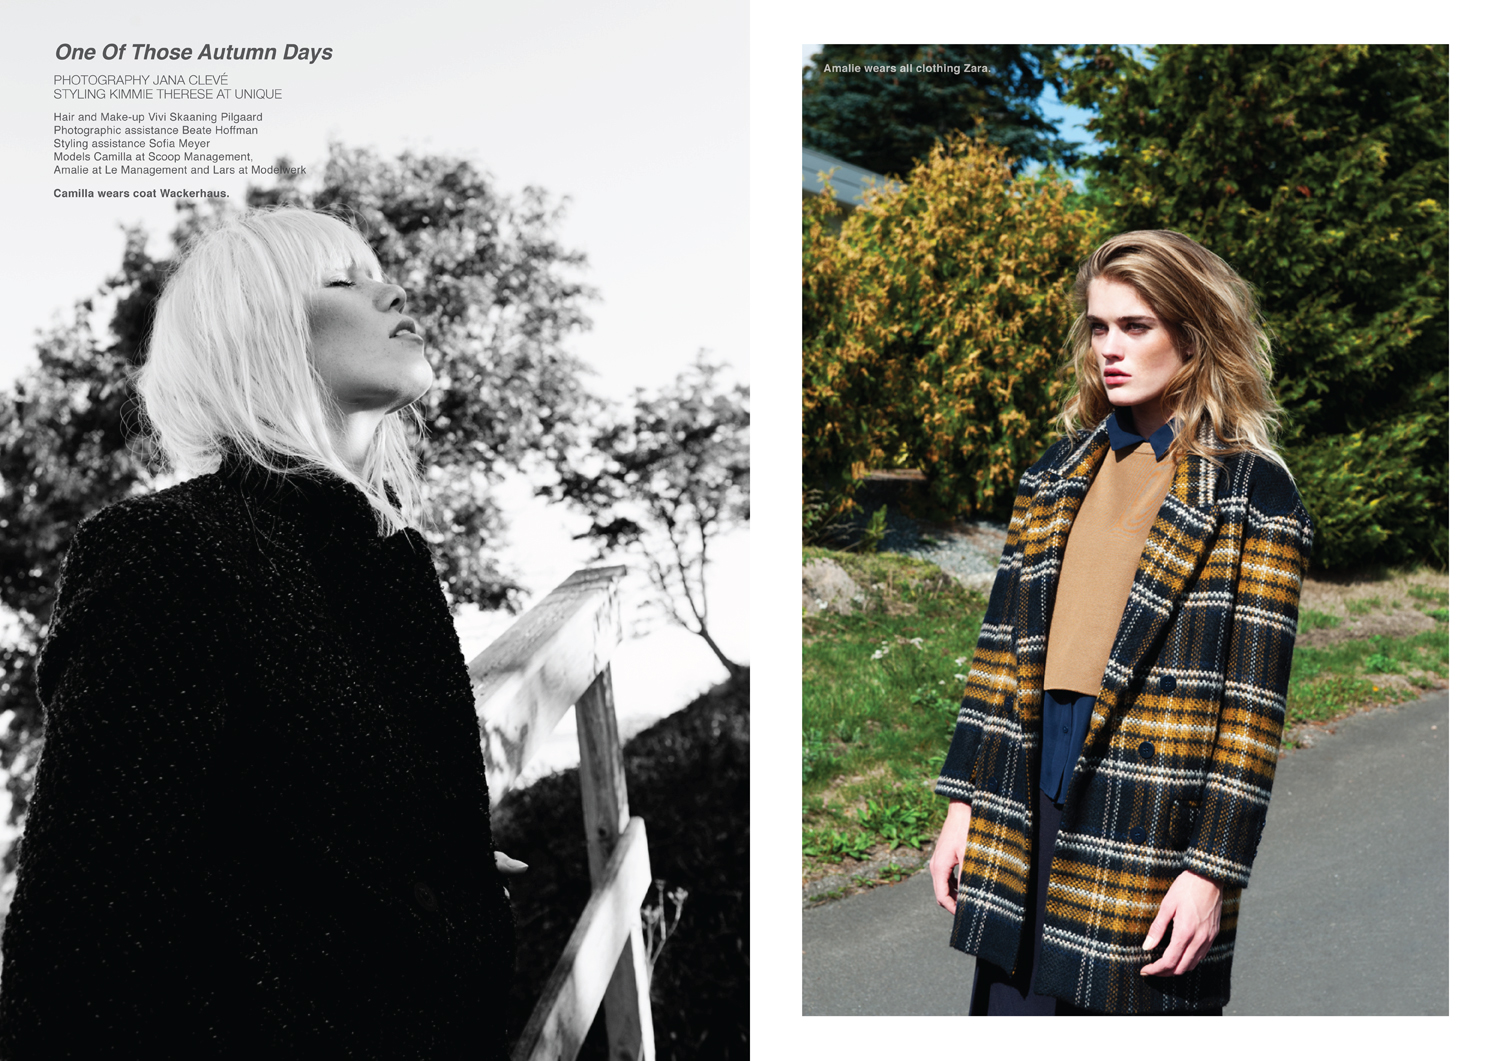 Left page, Camilla wears coat Wackerhaus. Right page, Amalie wears all clothing Zara.